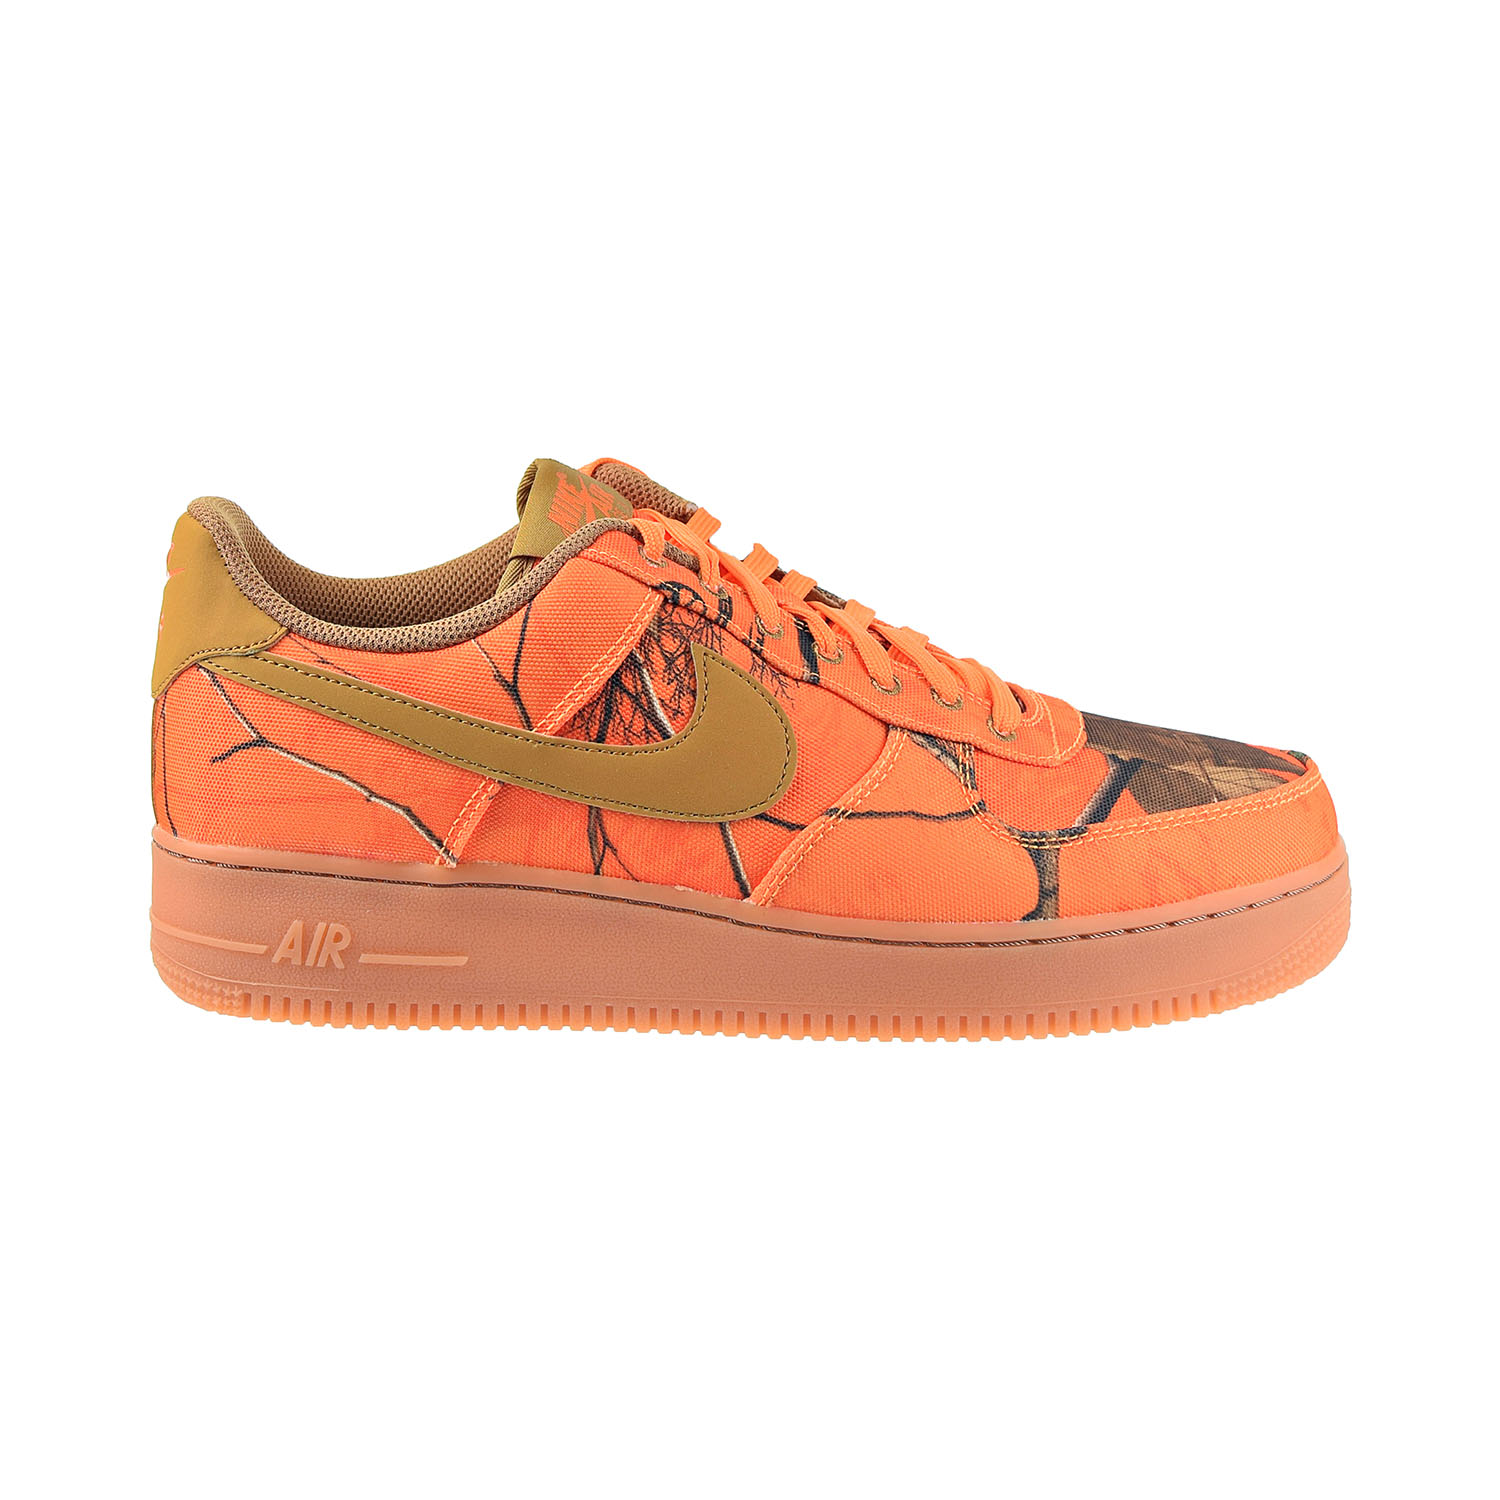 Nike Air Force 1 '07 LV8 3 Men's Shoes Orange Blaze-Wheat ao2441-800